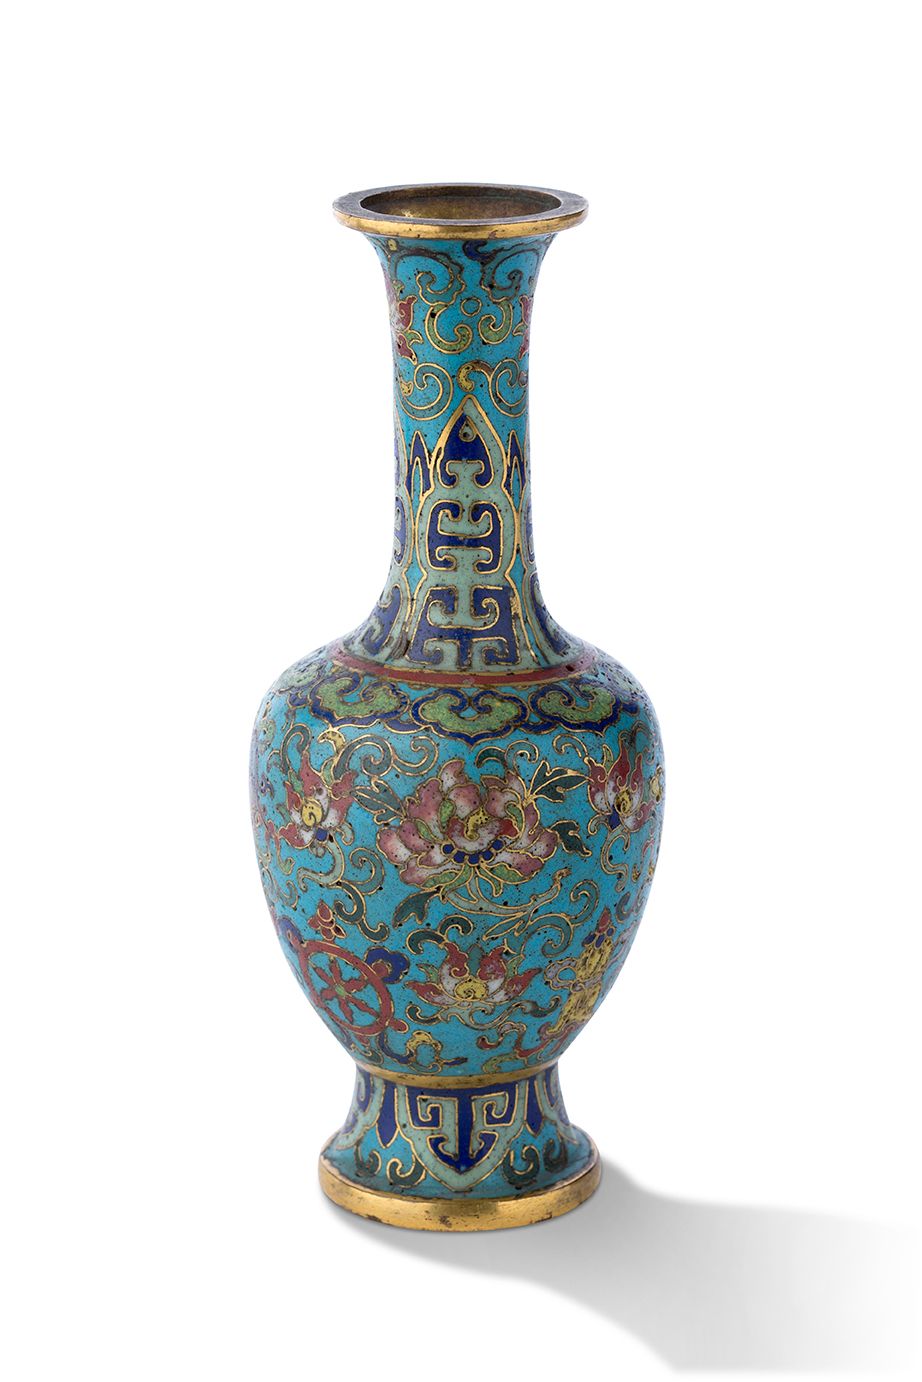 CHINE DYNASTIE QING, ÉPOQUE QIANLONG (1735-1796) Small bottle vase
In gilt bronz&hellip;